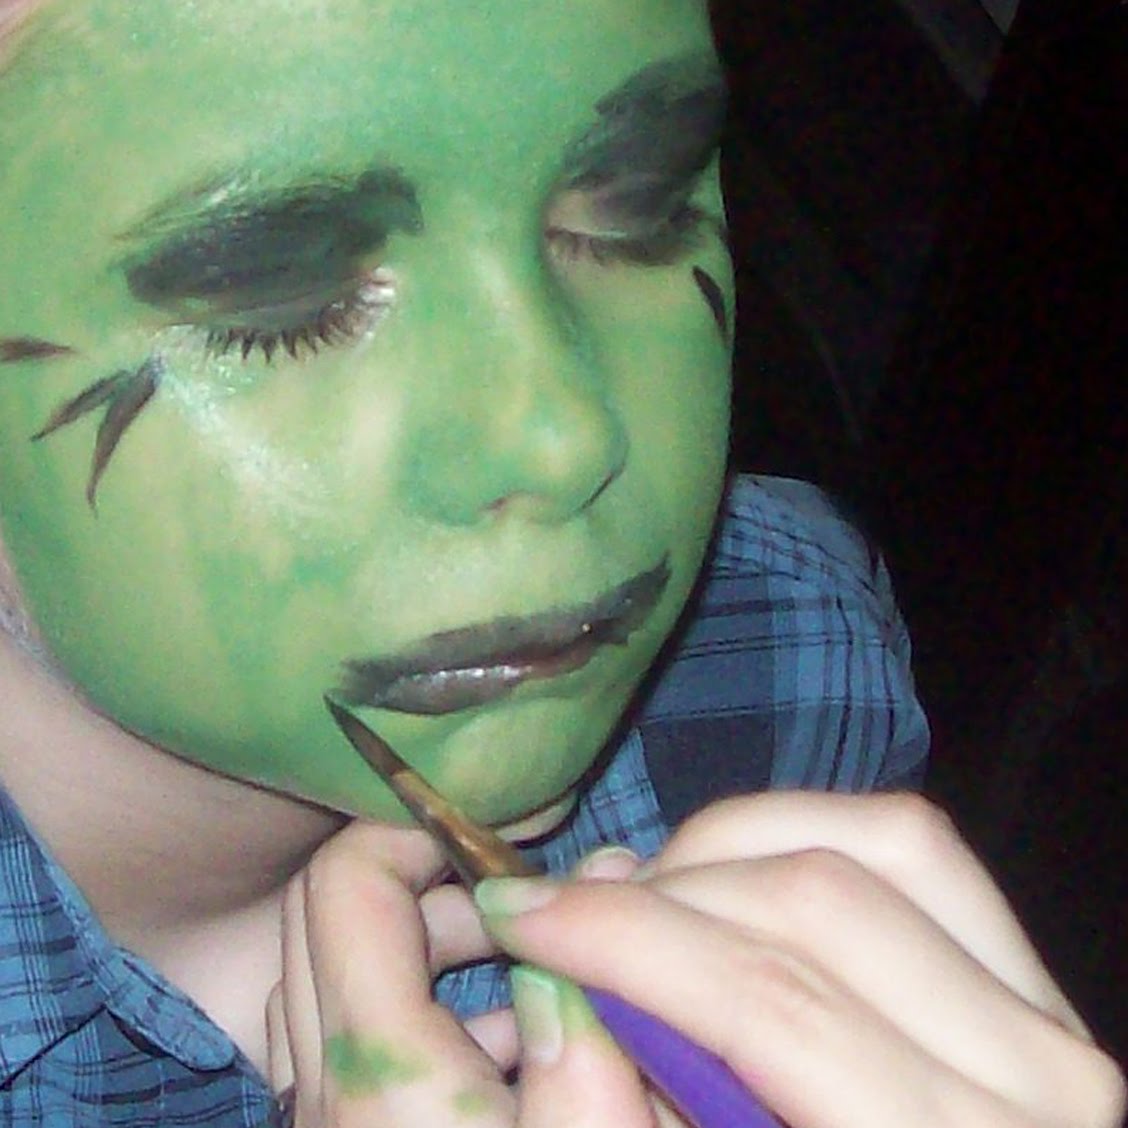 Hulk Face Paint